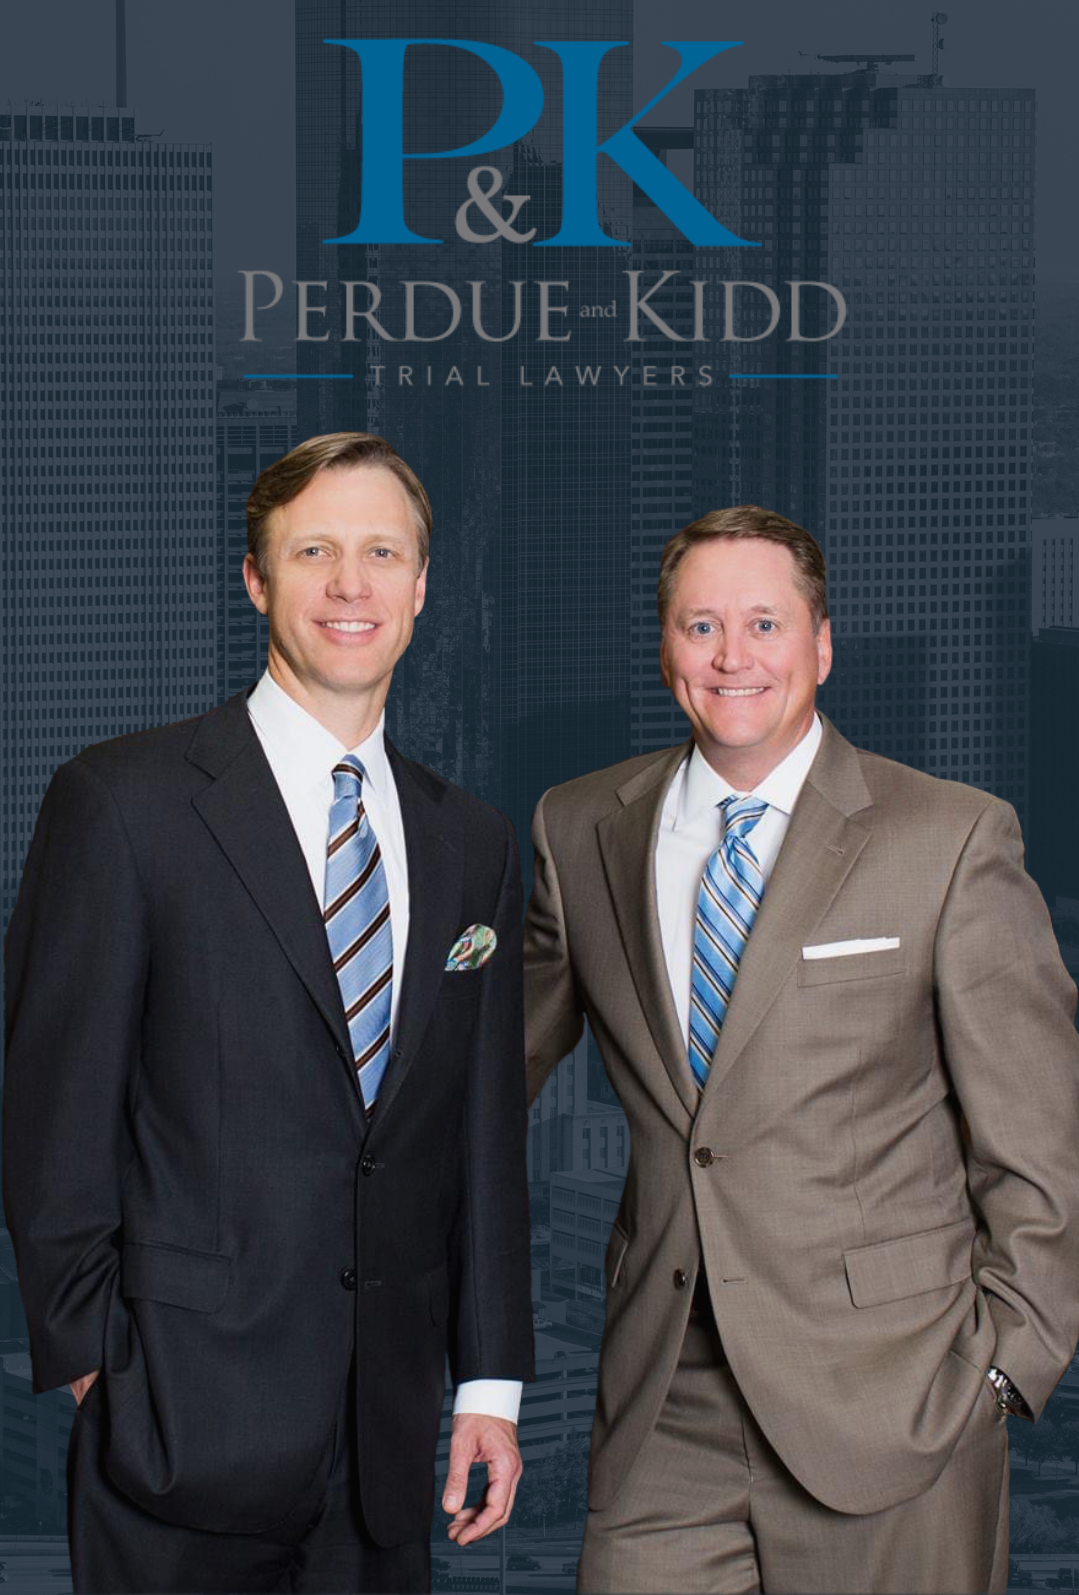 Perdue & Kidd in 2017